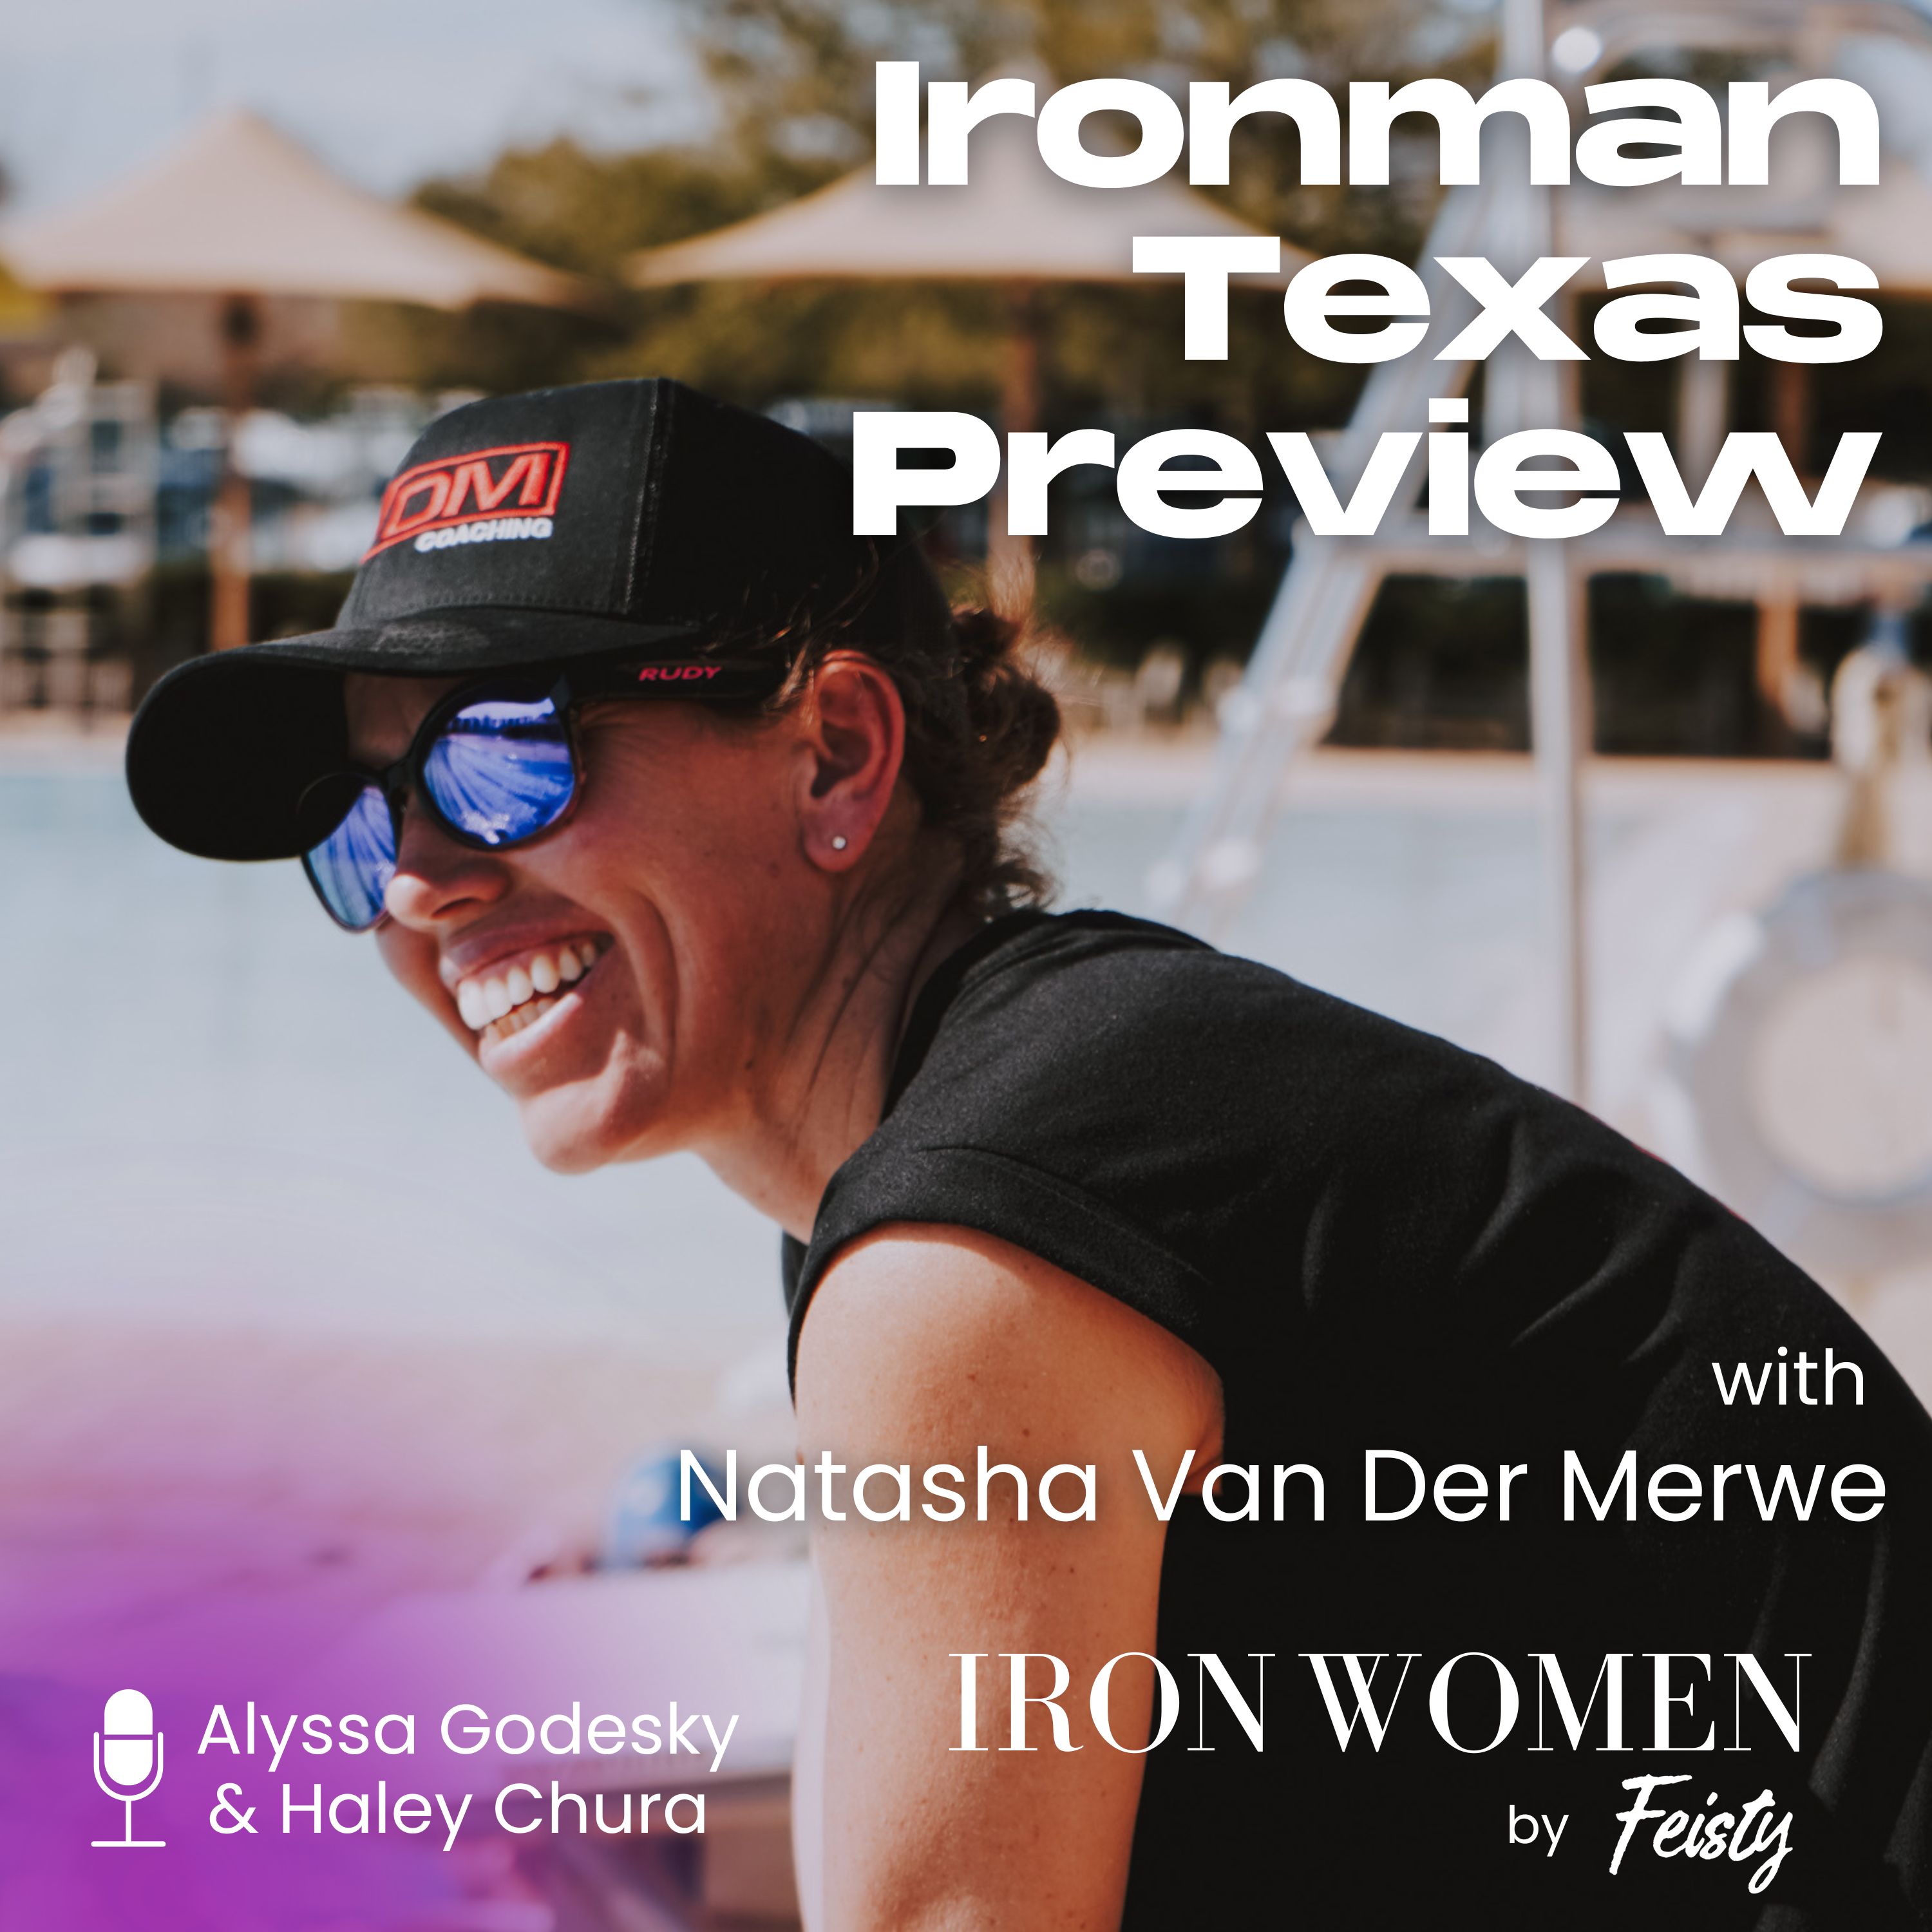 IronWomen - Ironman Texas Preview with Natasha Van Der Merwe